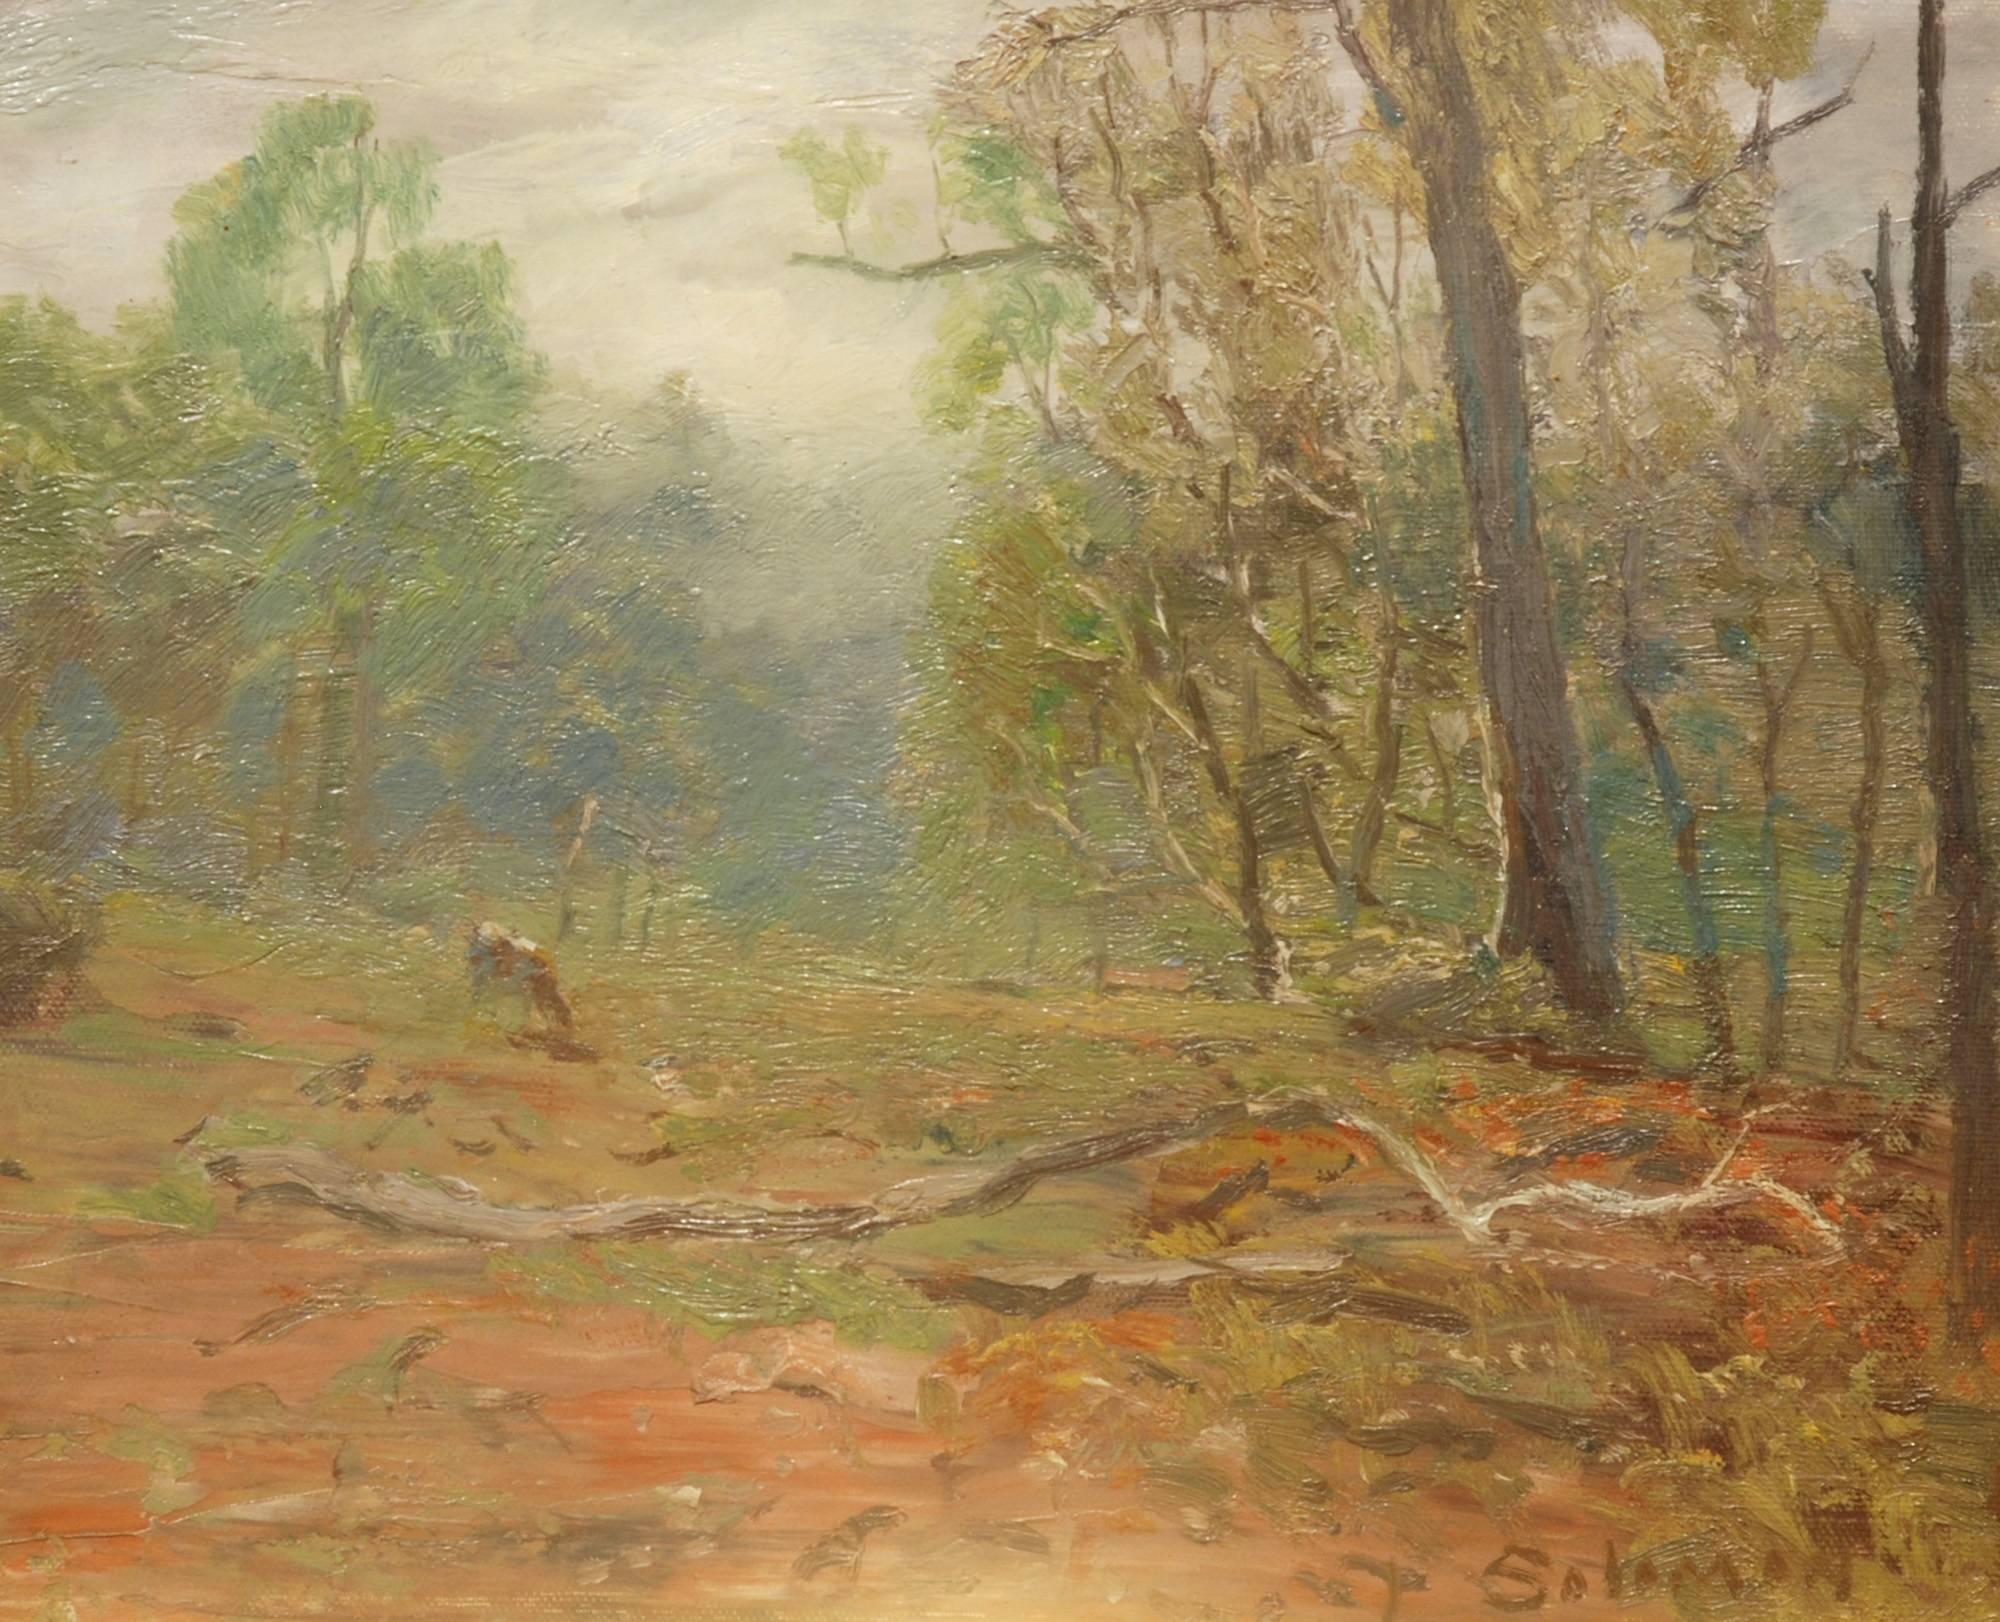 Lance Vaiben Solomon Animal Painting - Quiet Pastures, New South Wales